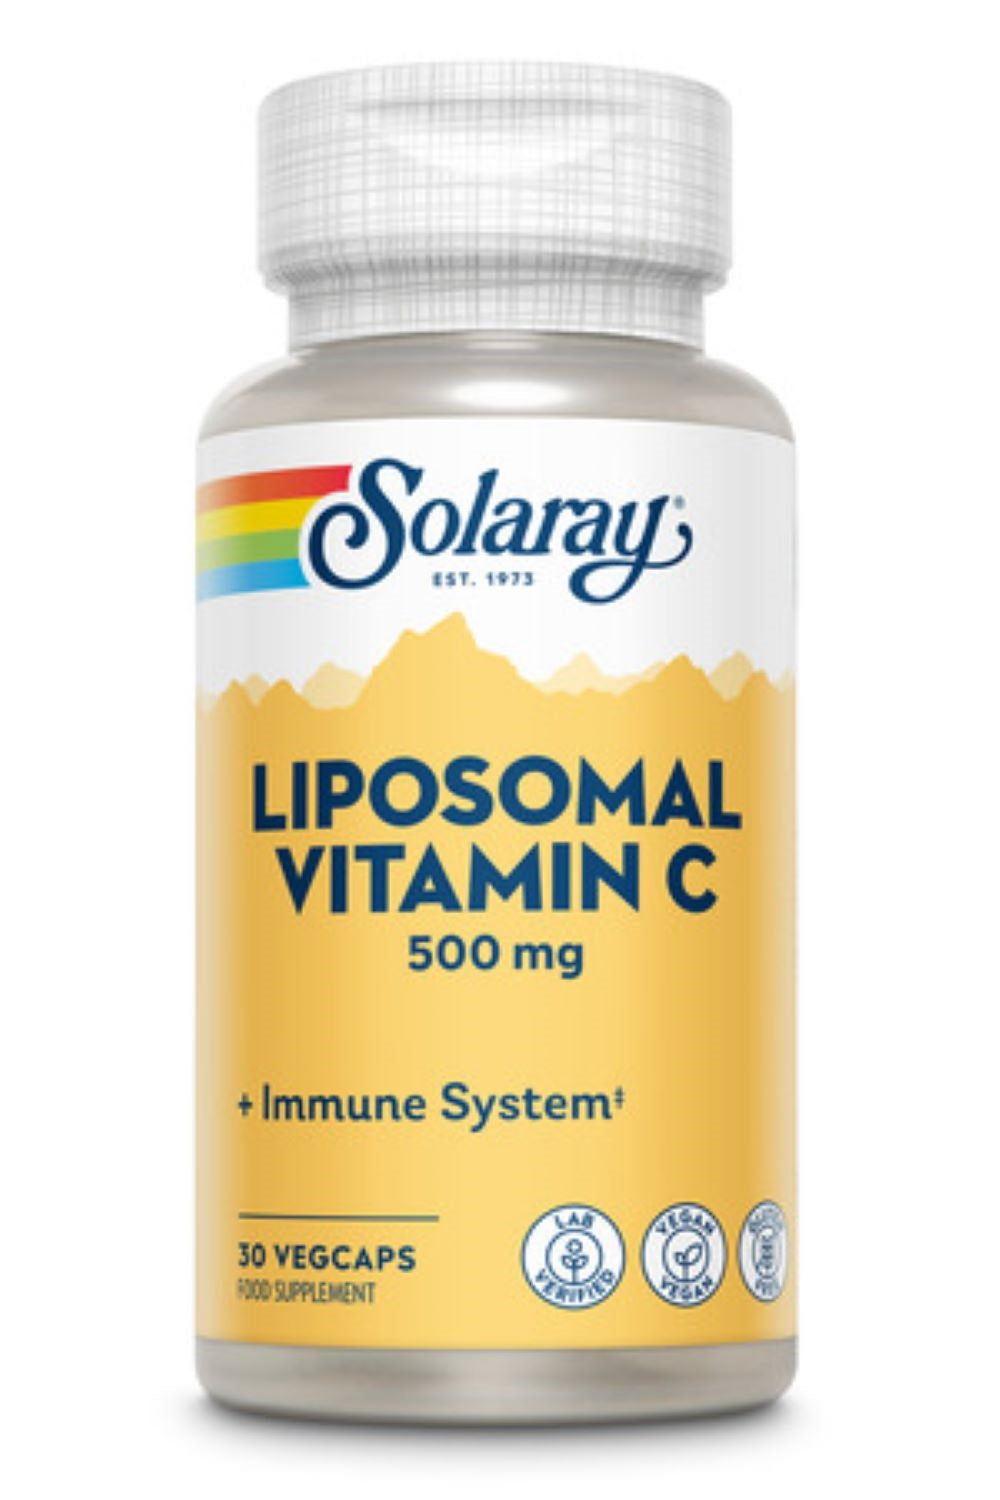 Solaray Liposomal Vitamin C- 500mg, 30 Veg Caps